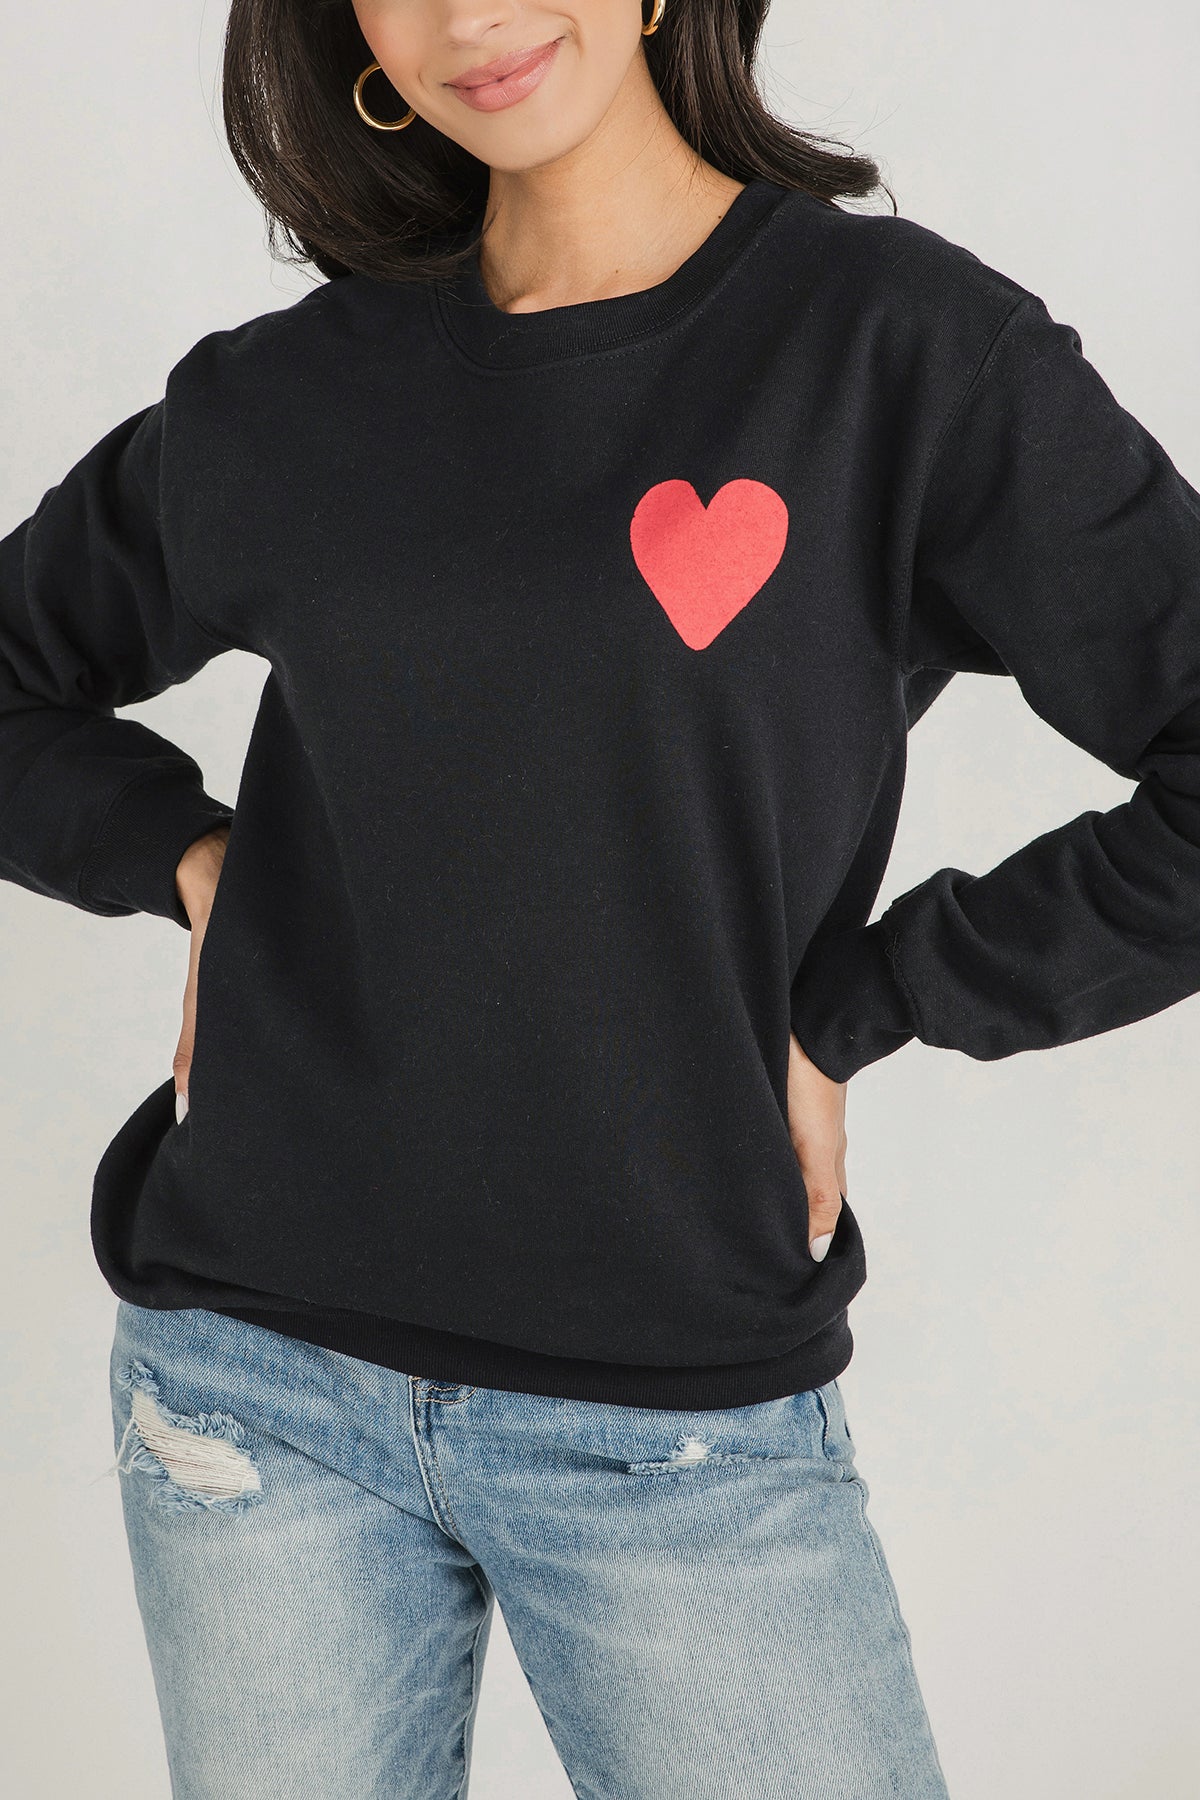 Blume + Co Pocket Heart Graphic Sweatshirt